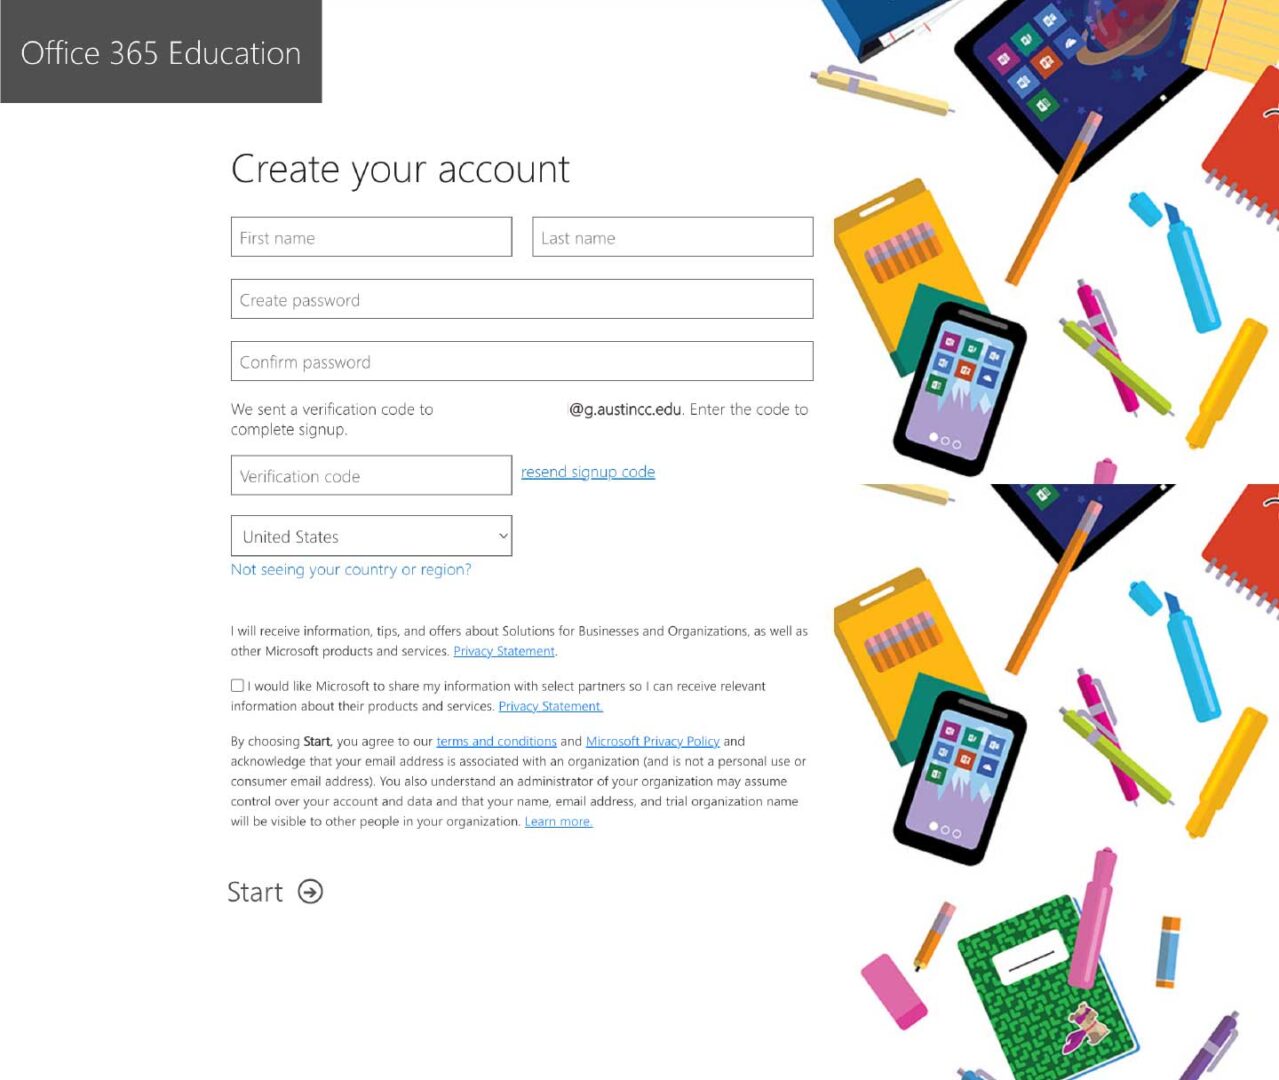 Screenshot of Microsoft Office 365 Education account creation form